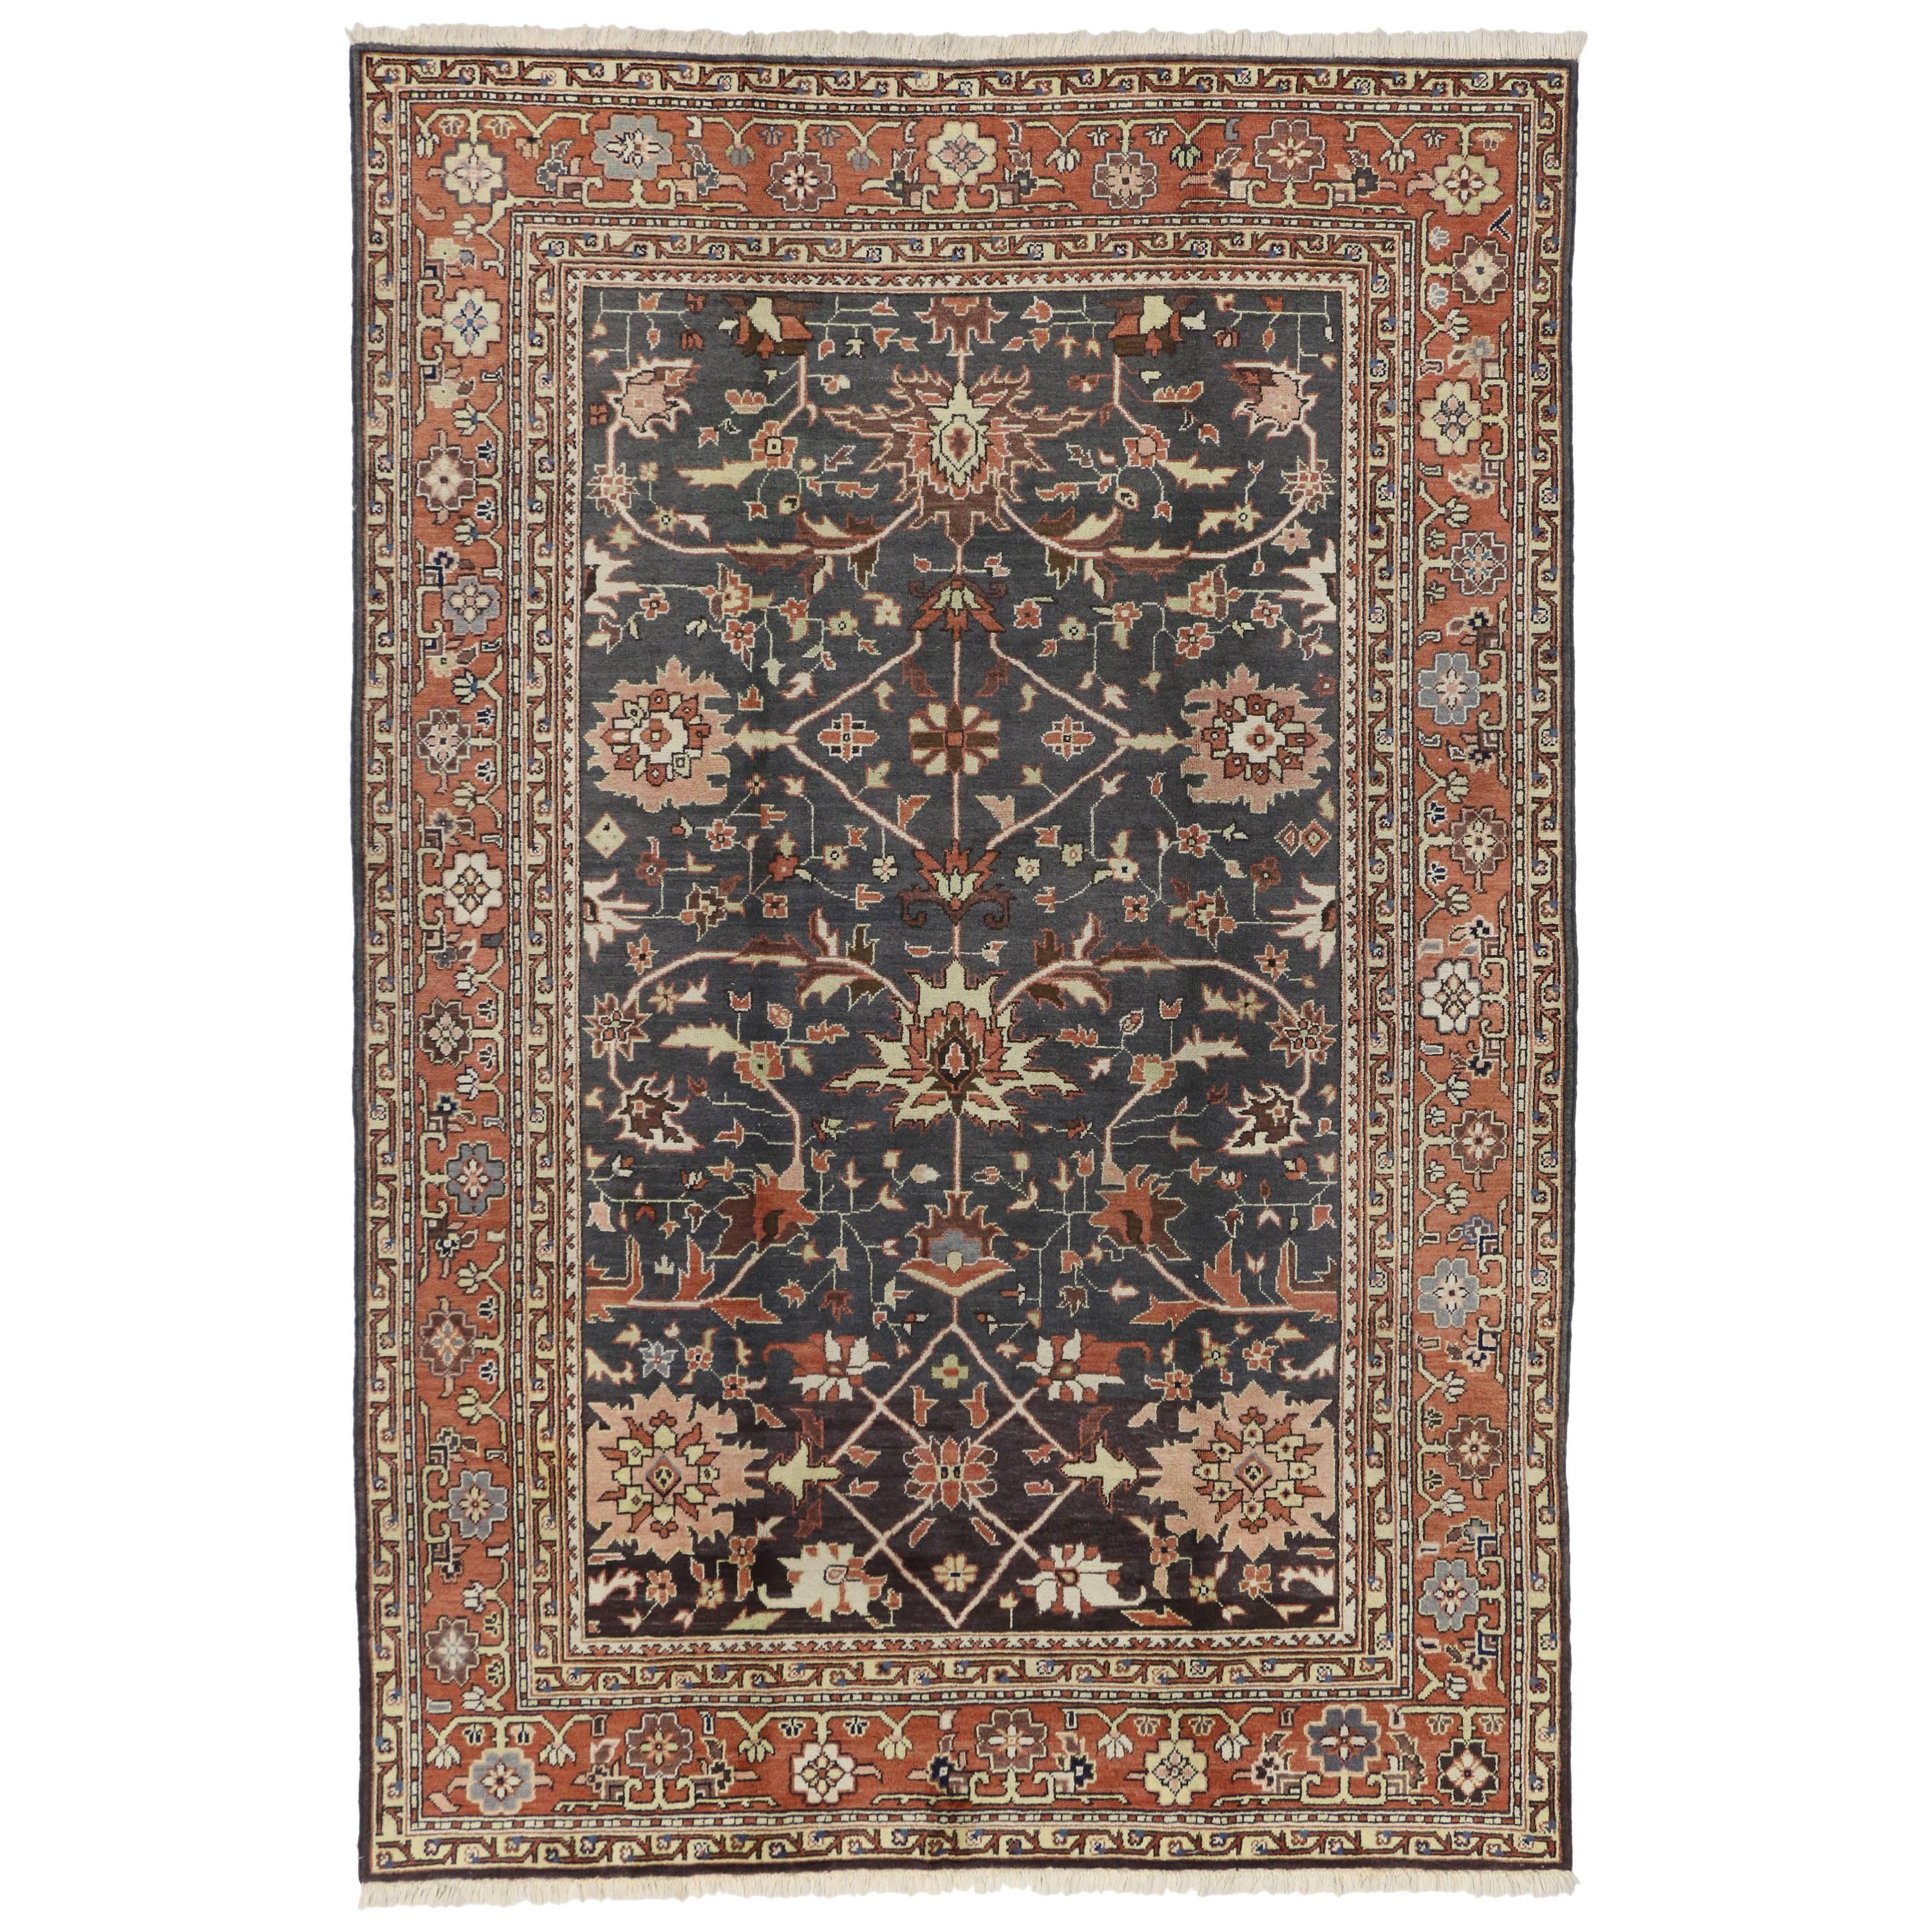 Persischer Vintage-Teppich im Vintage-Stil mit traditionellem, modernem Design